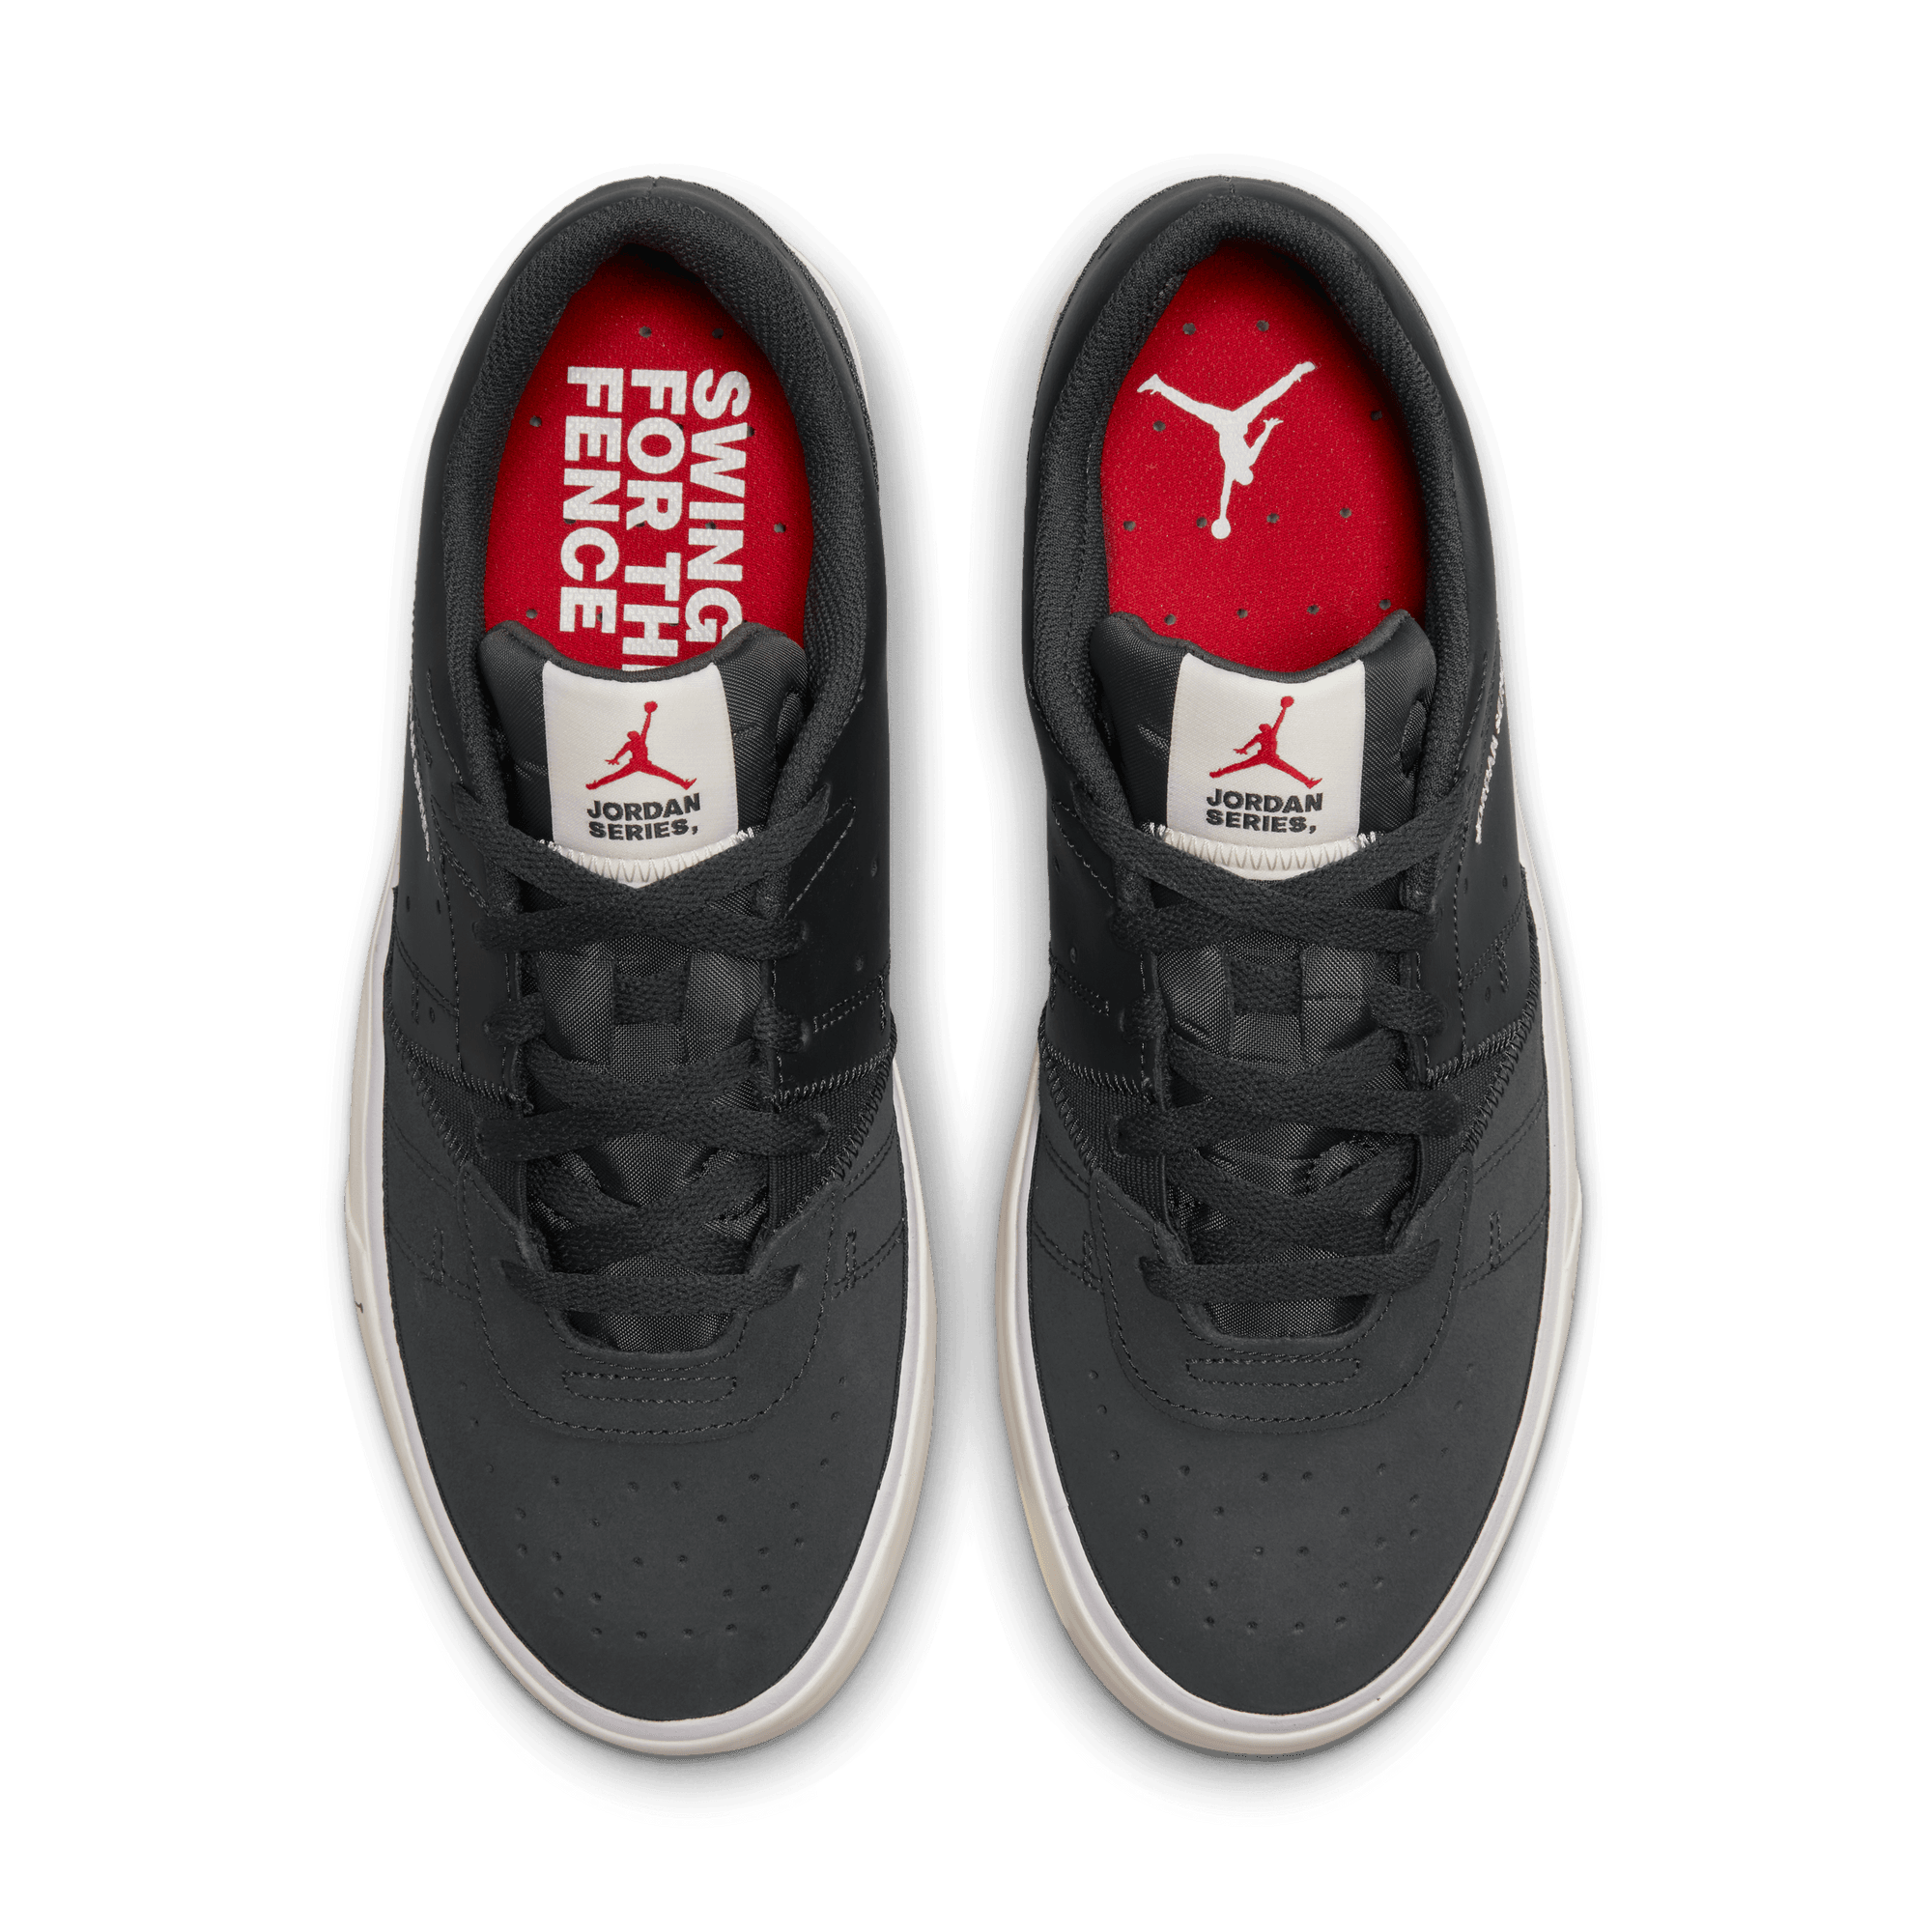 Compra Jordan Series ES por PEN 429.90 | Nike Perú